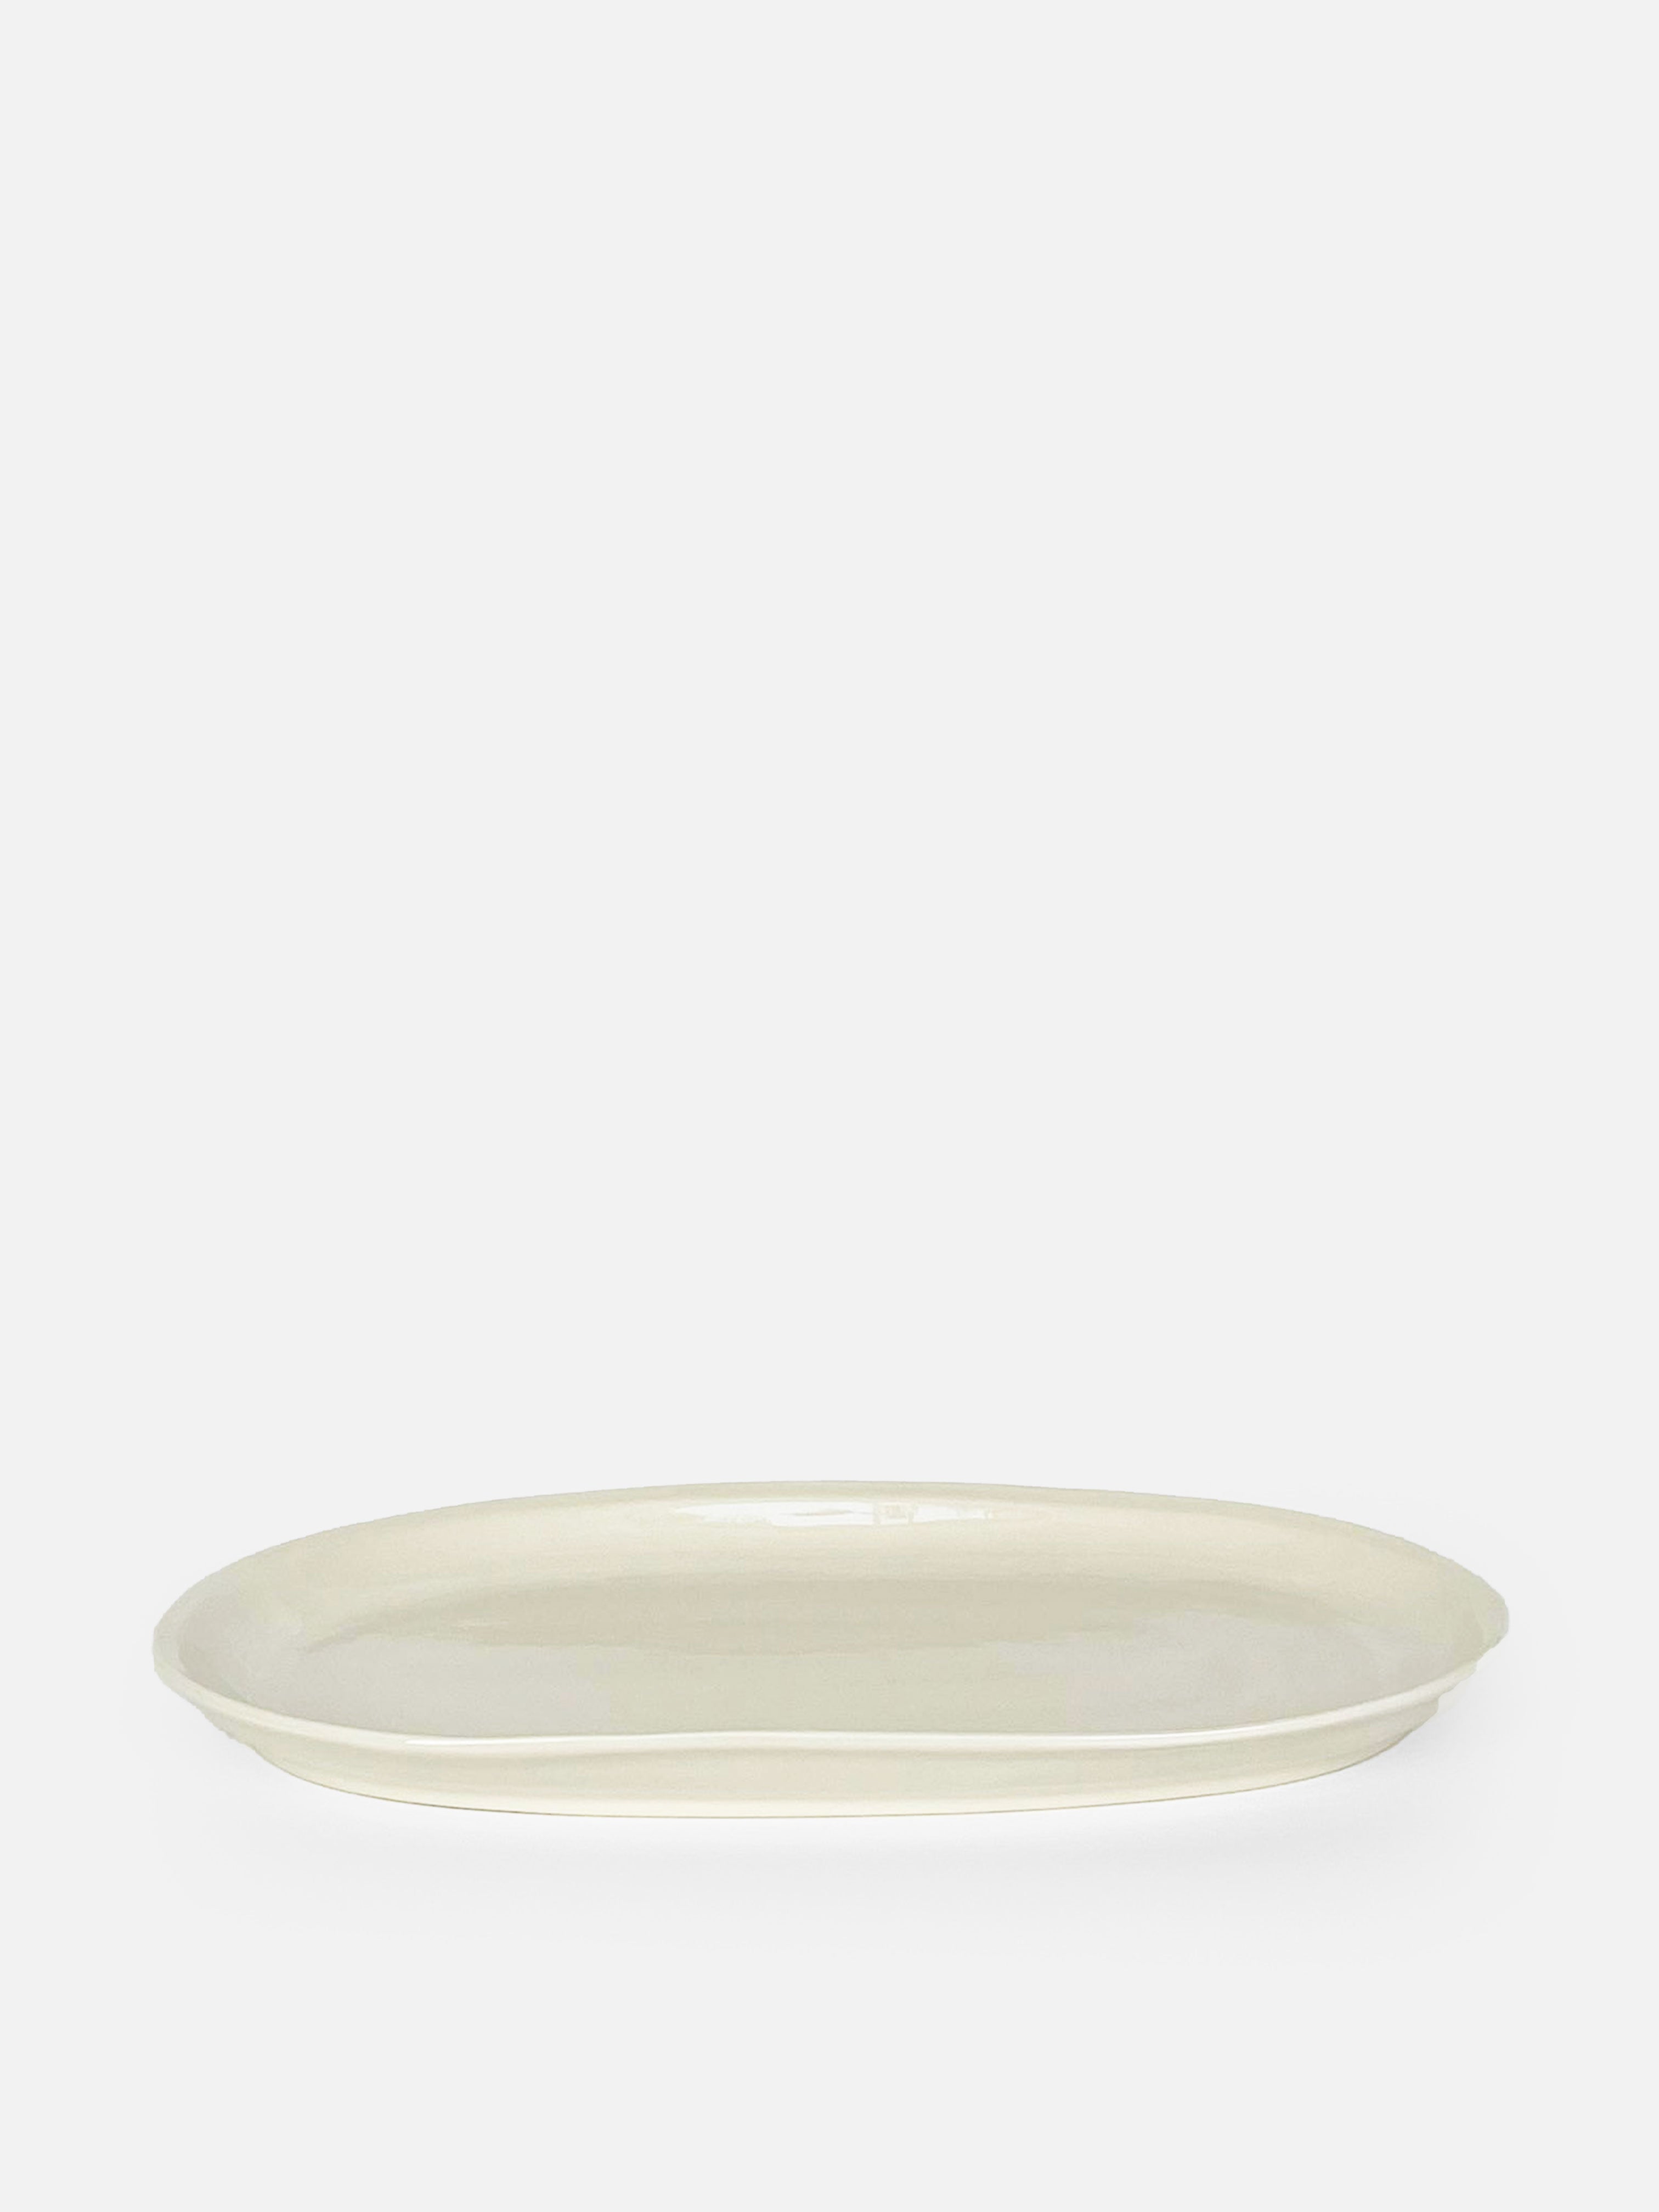 The Creamery Oval Platter